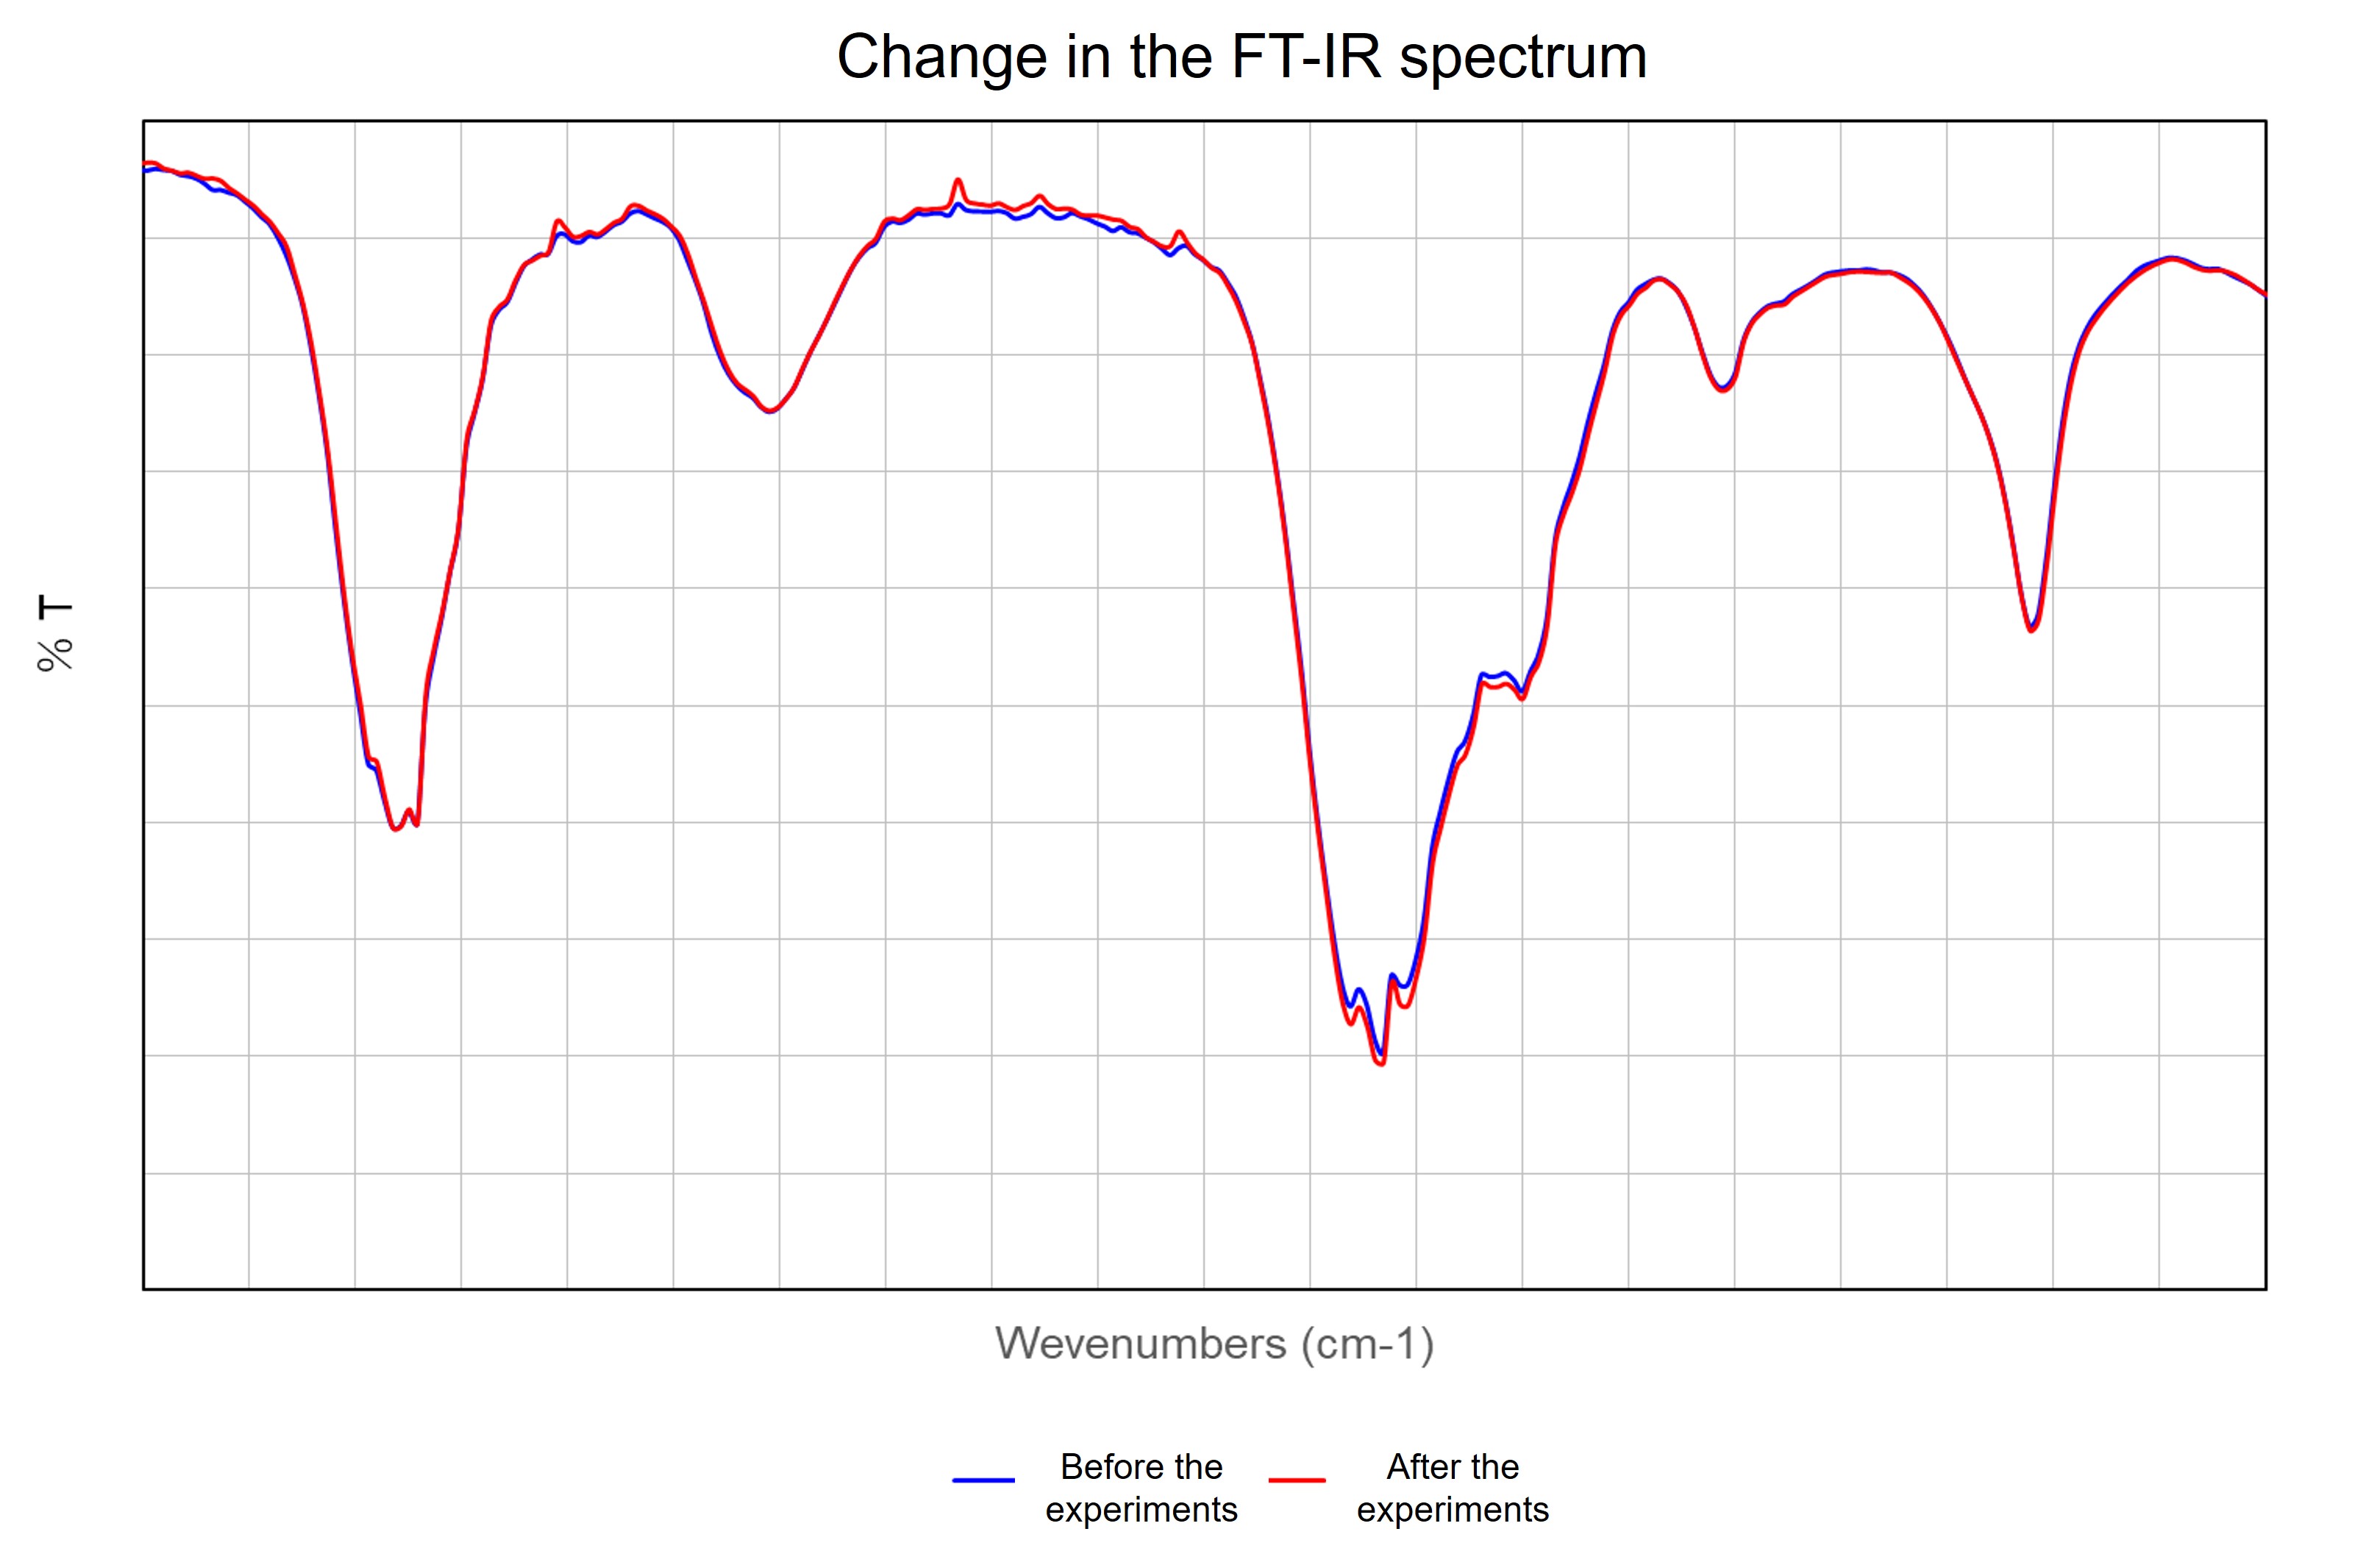 image:Change in the FT-IR spectrum